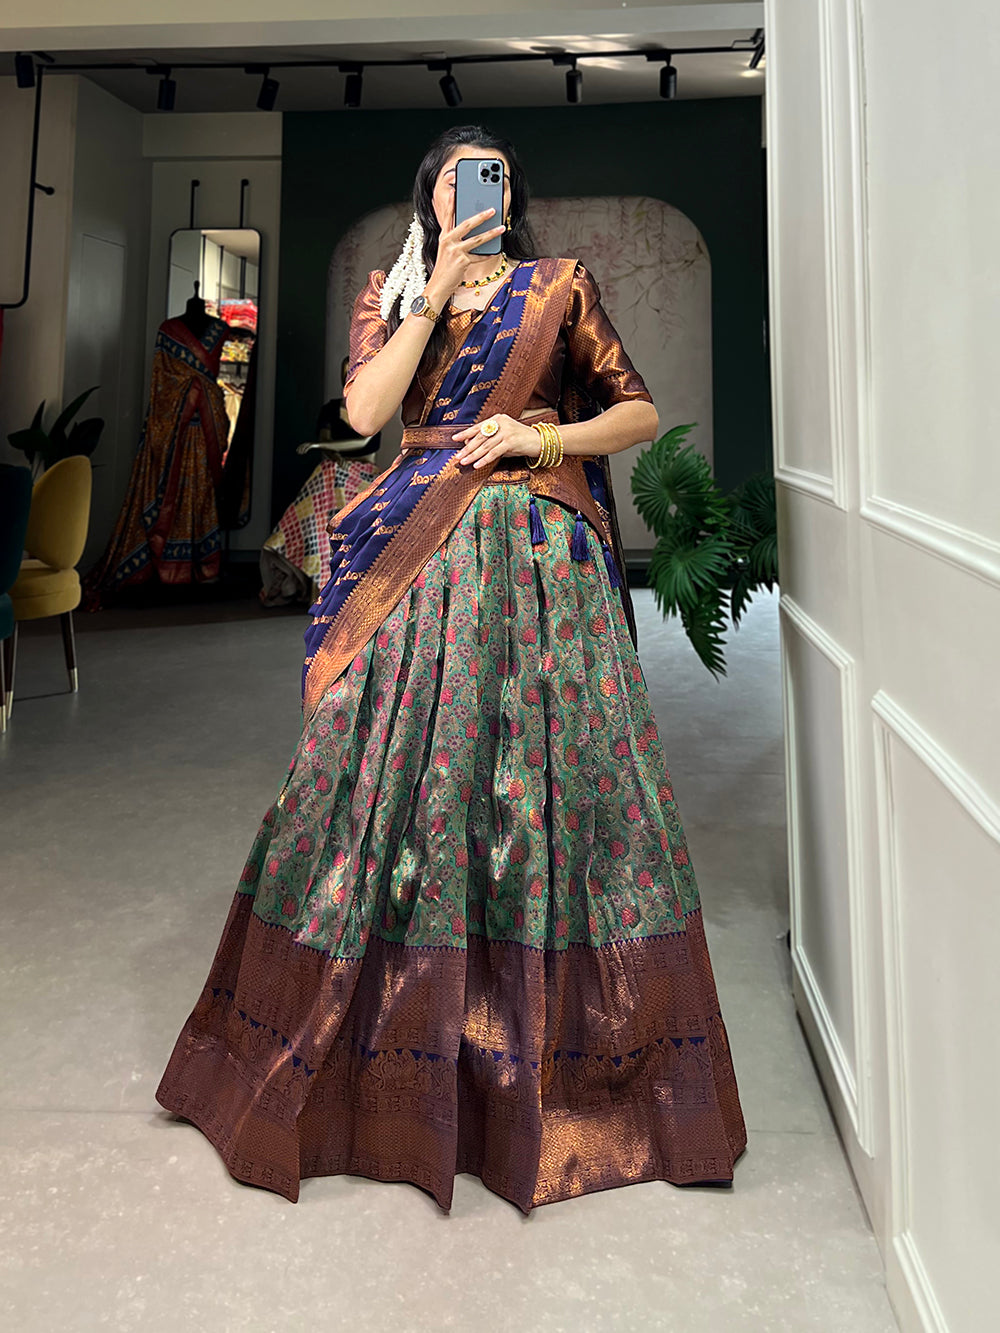 South Indian Style Dupatta Drape | Indian fashion, Half saree designs,  Fashion